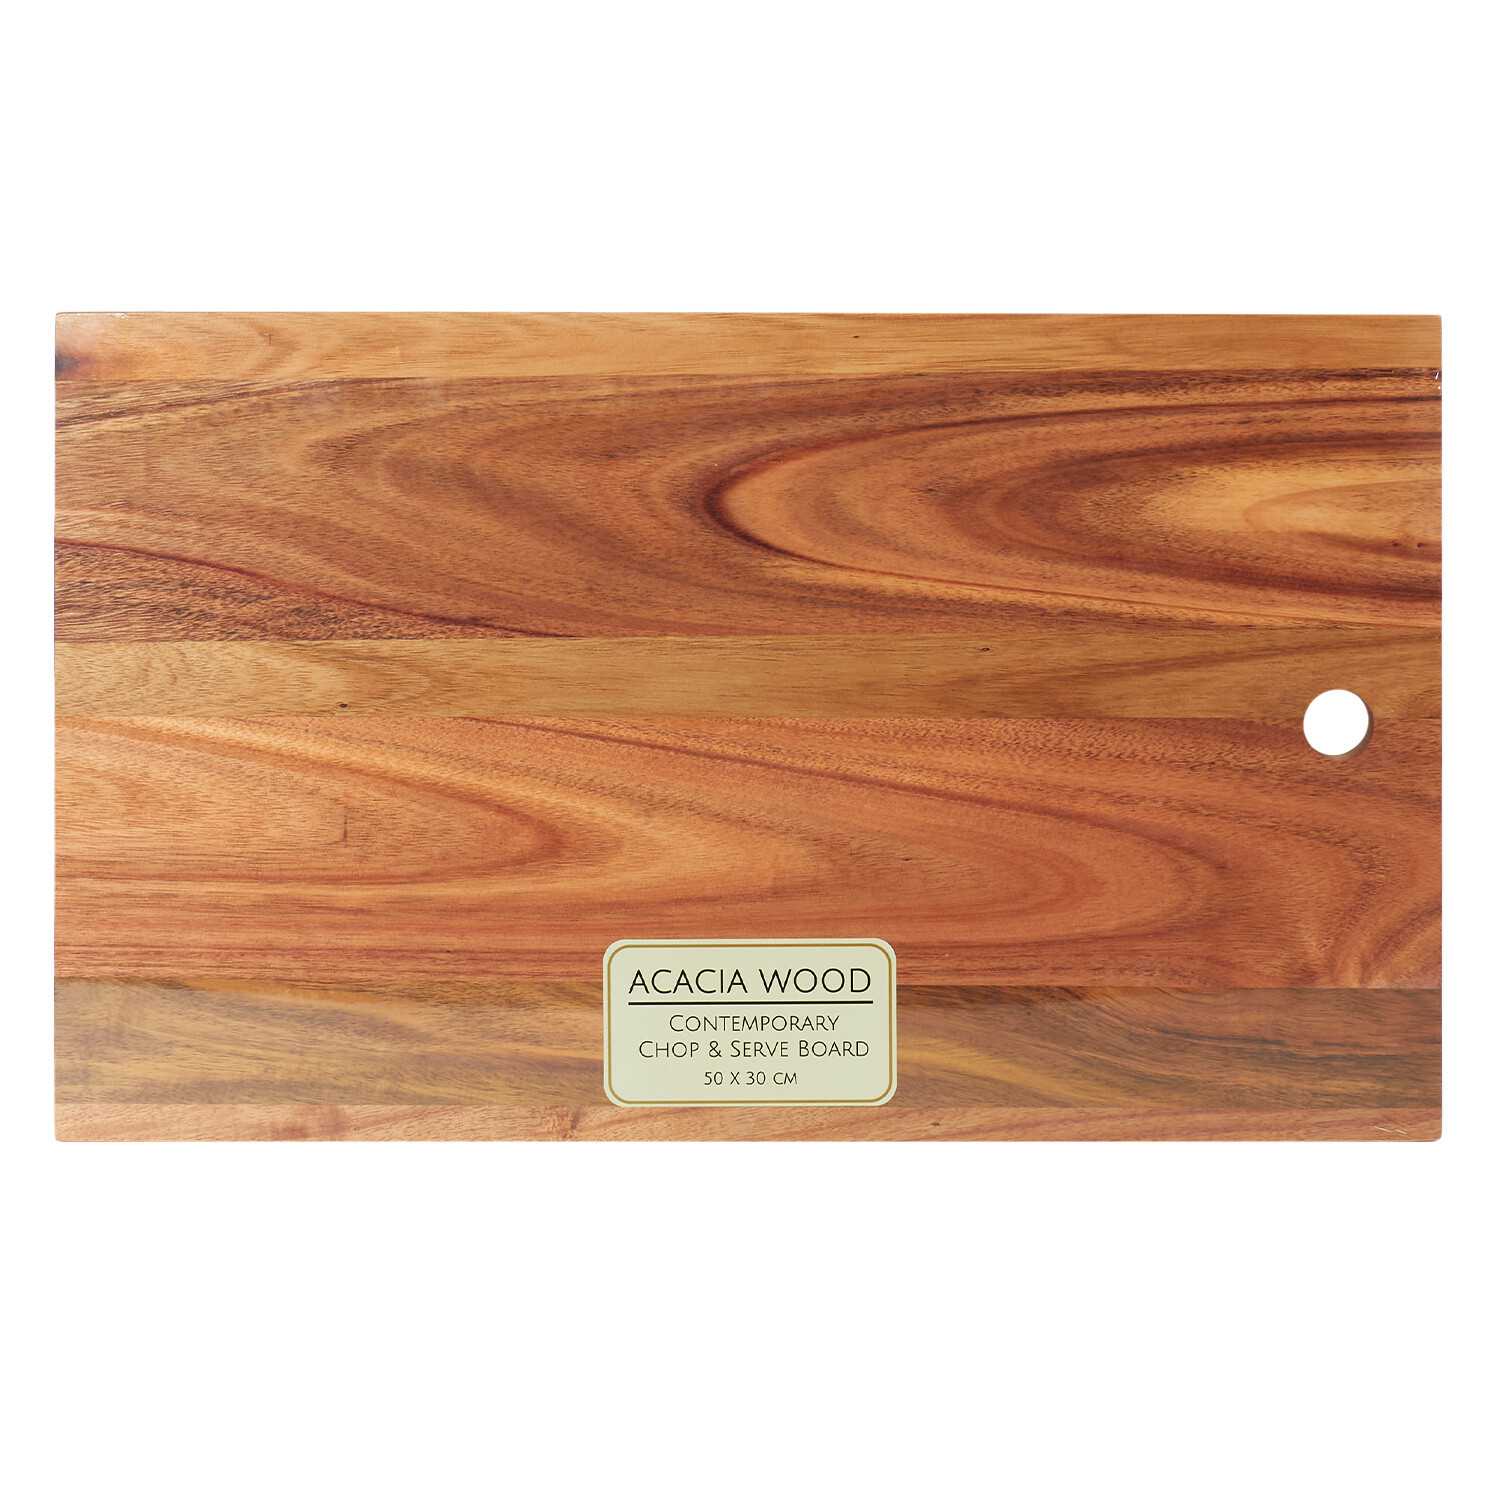 Acacia Contemporary Chop and Serve Board - Brown Image 1